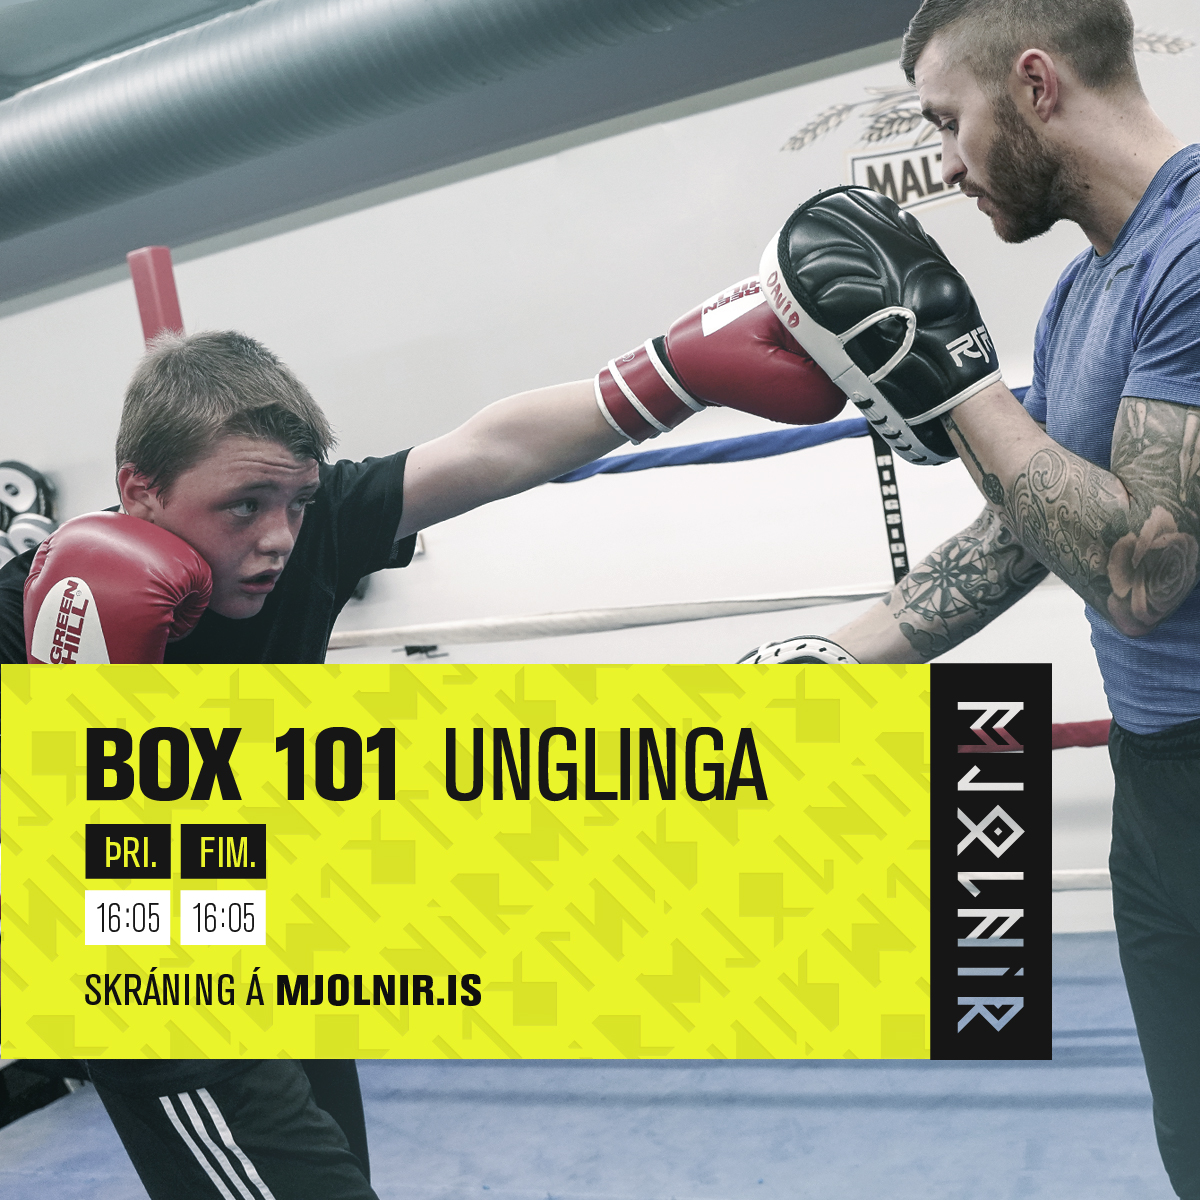 Box 101 unglinga